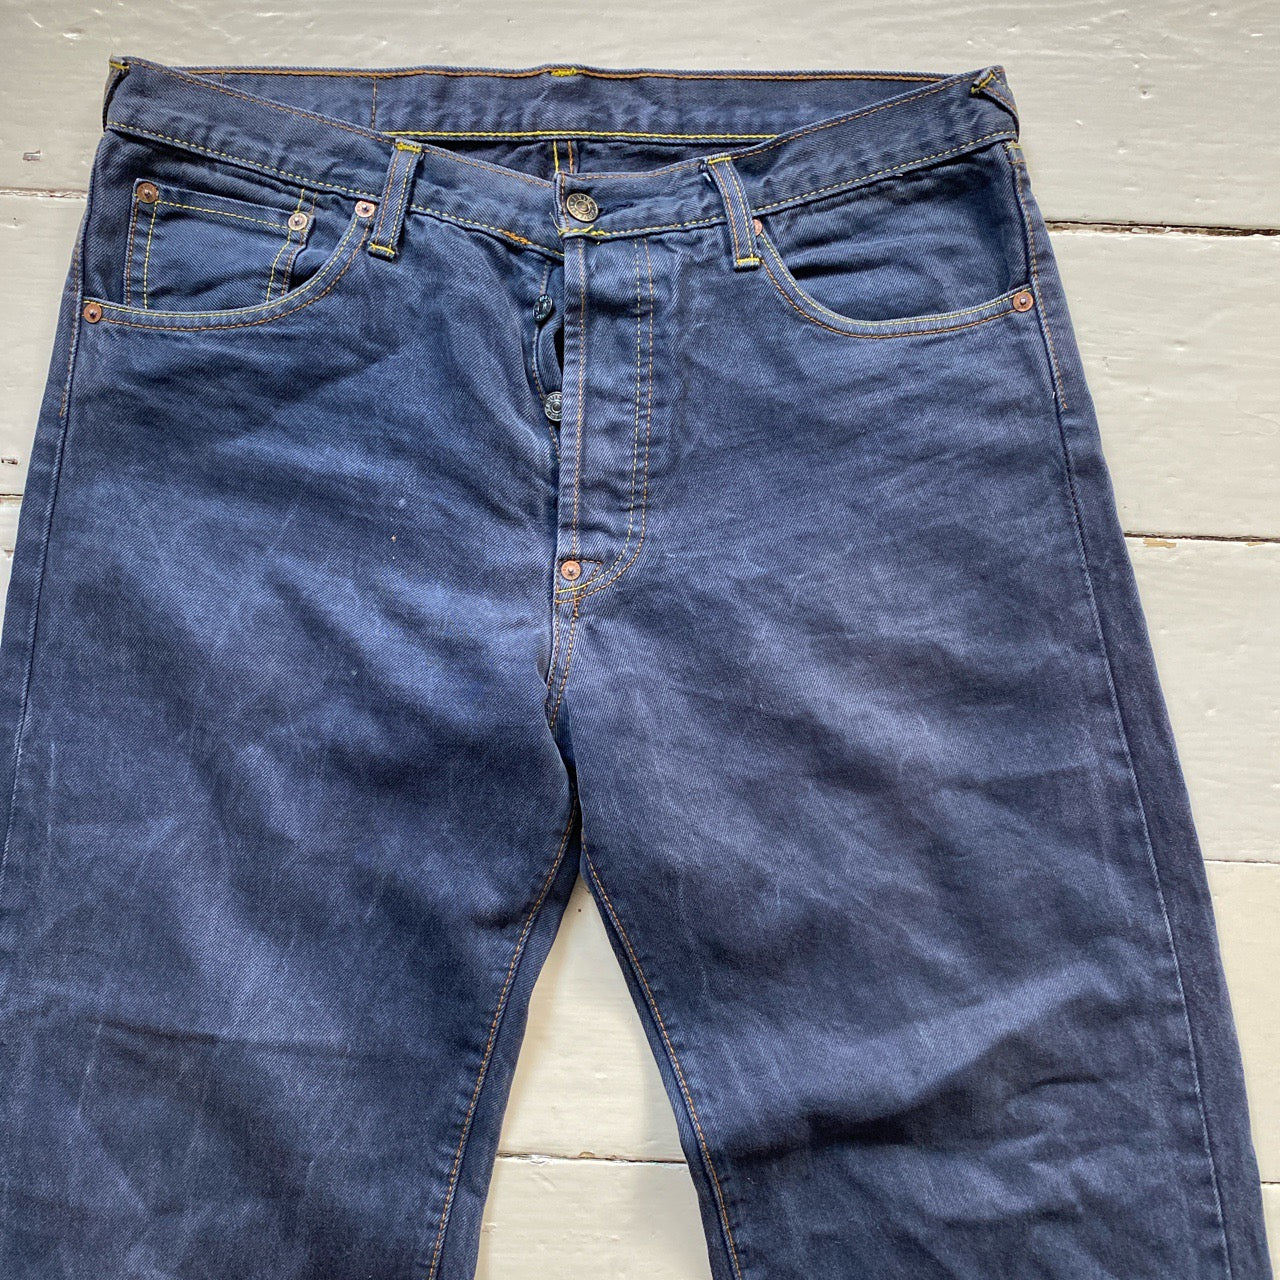 Evisu Vintage Swoosh Jeans (36/32)